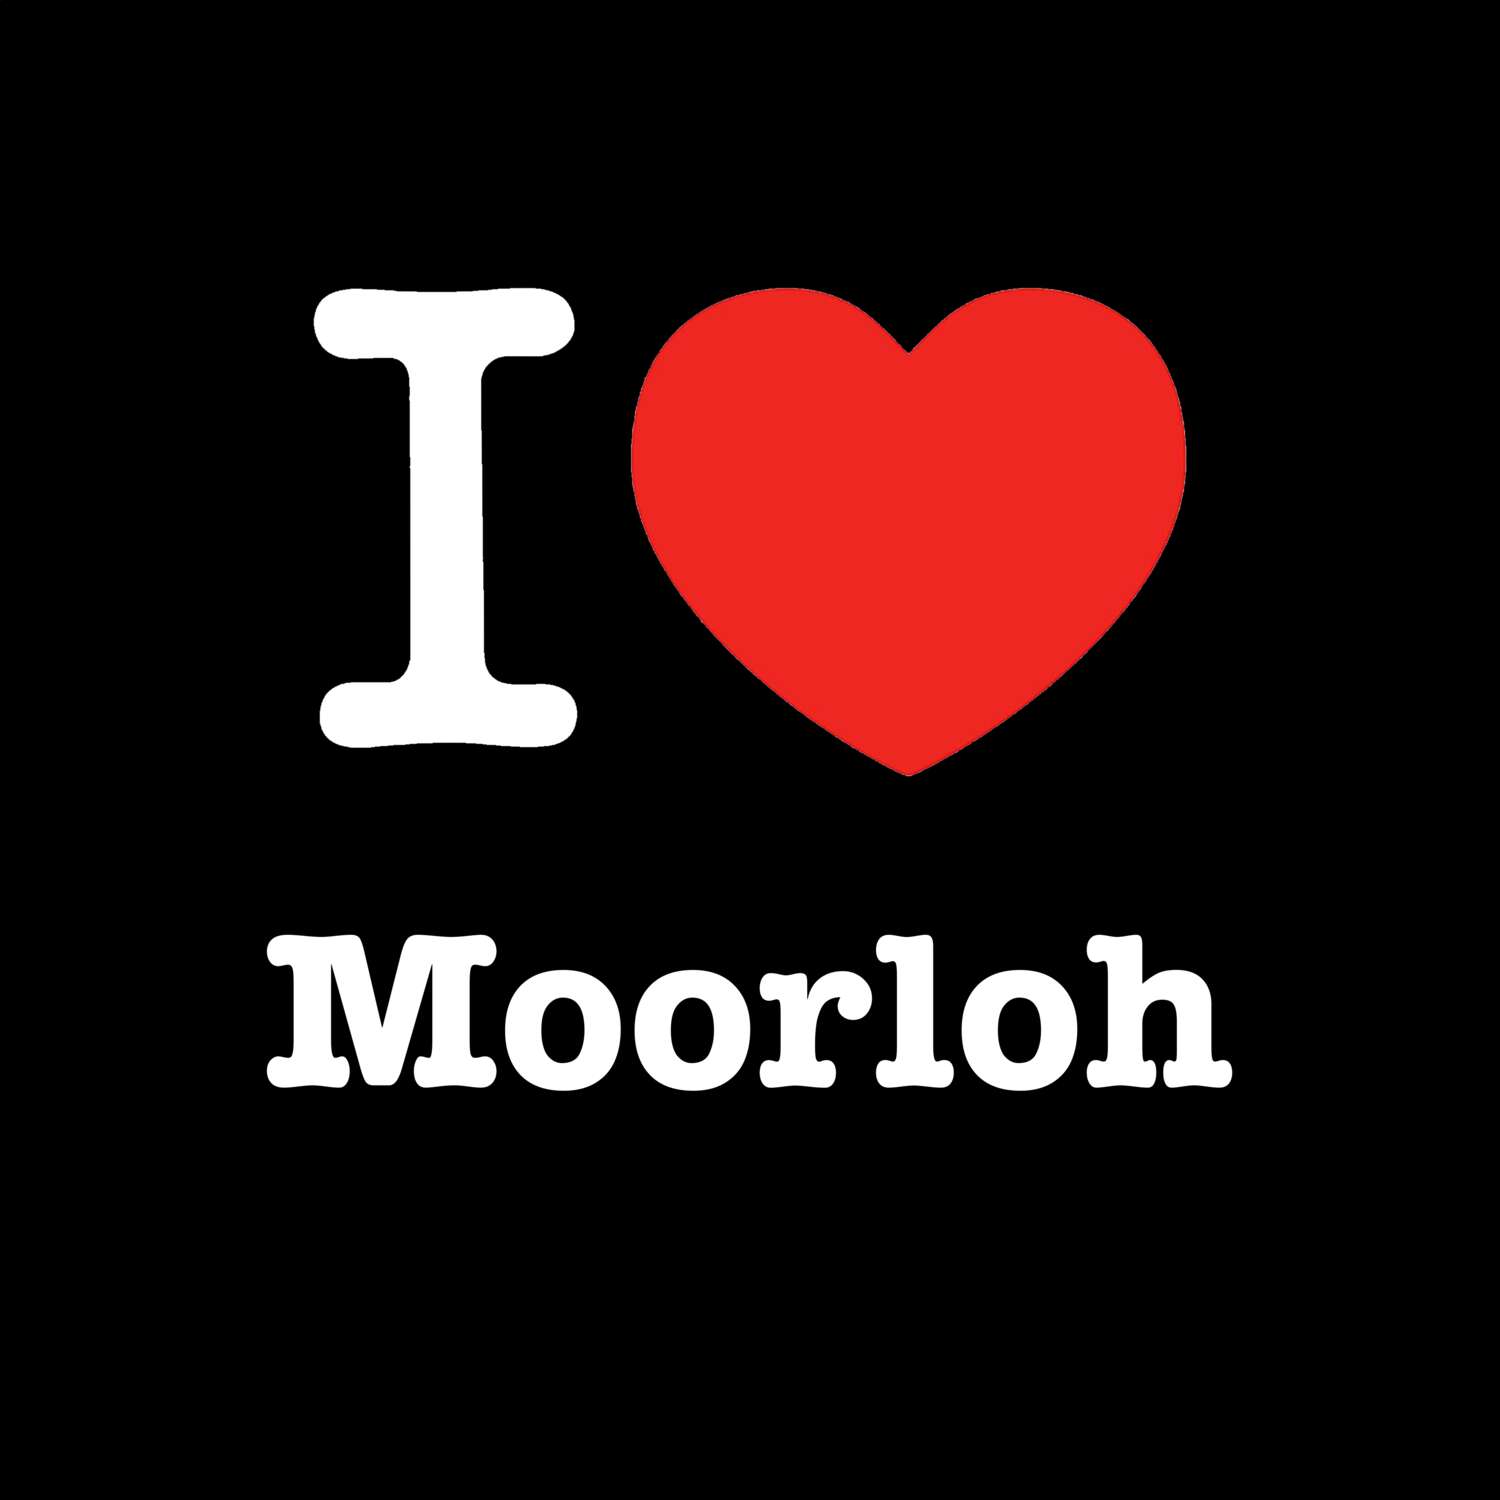 Moorloh T-Shirt »I love«